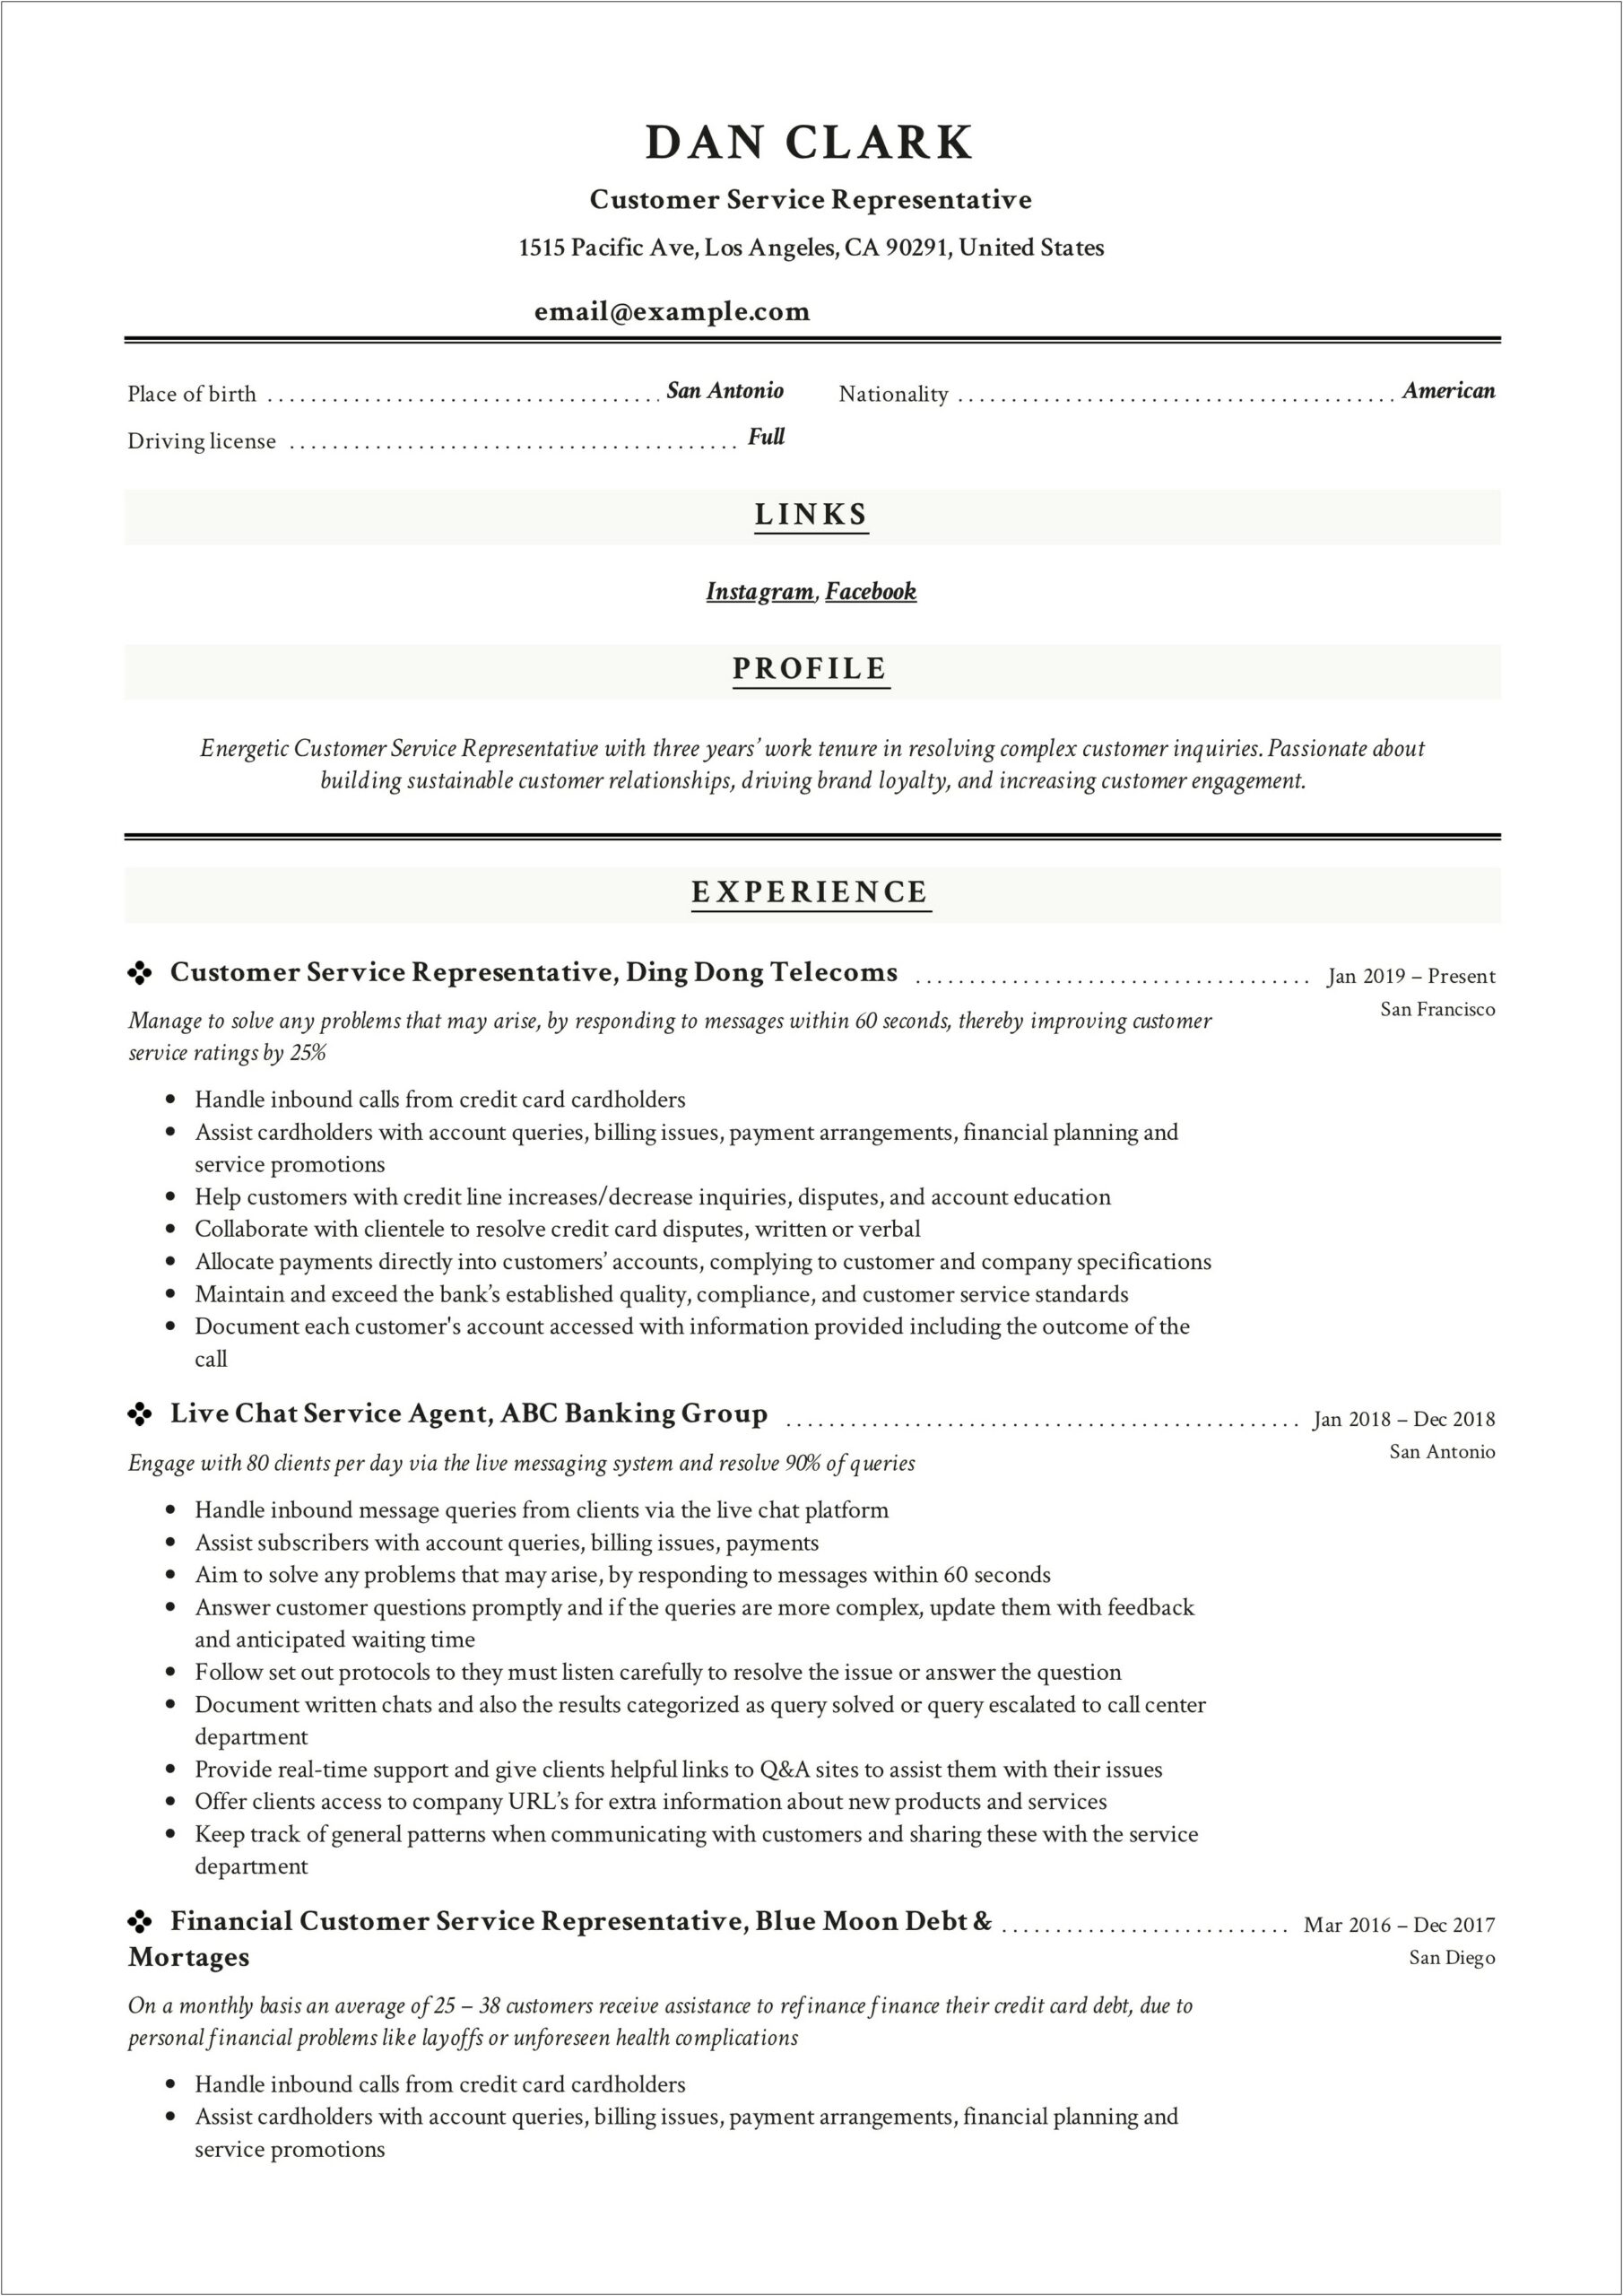 Customer Service Associate Job Description For Resume